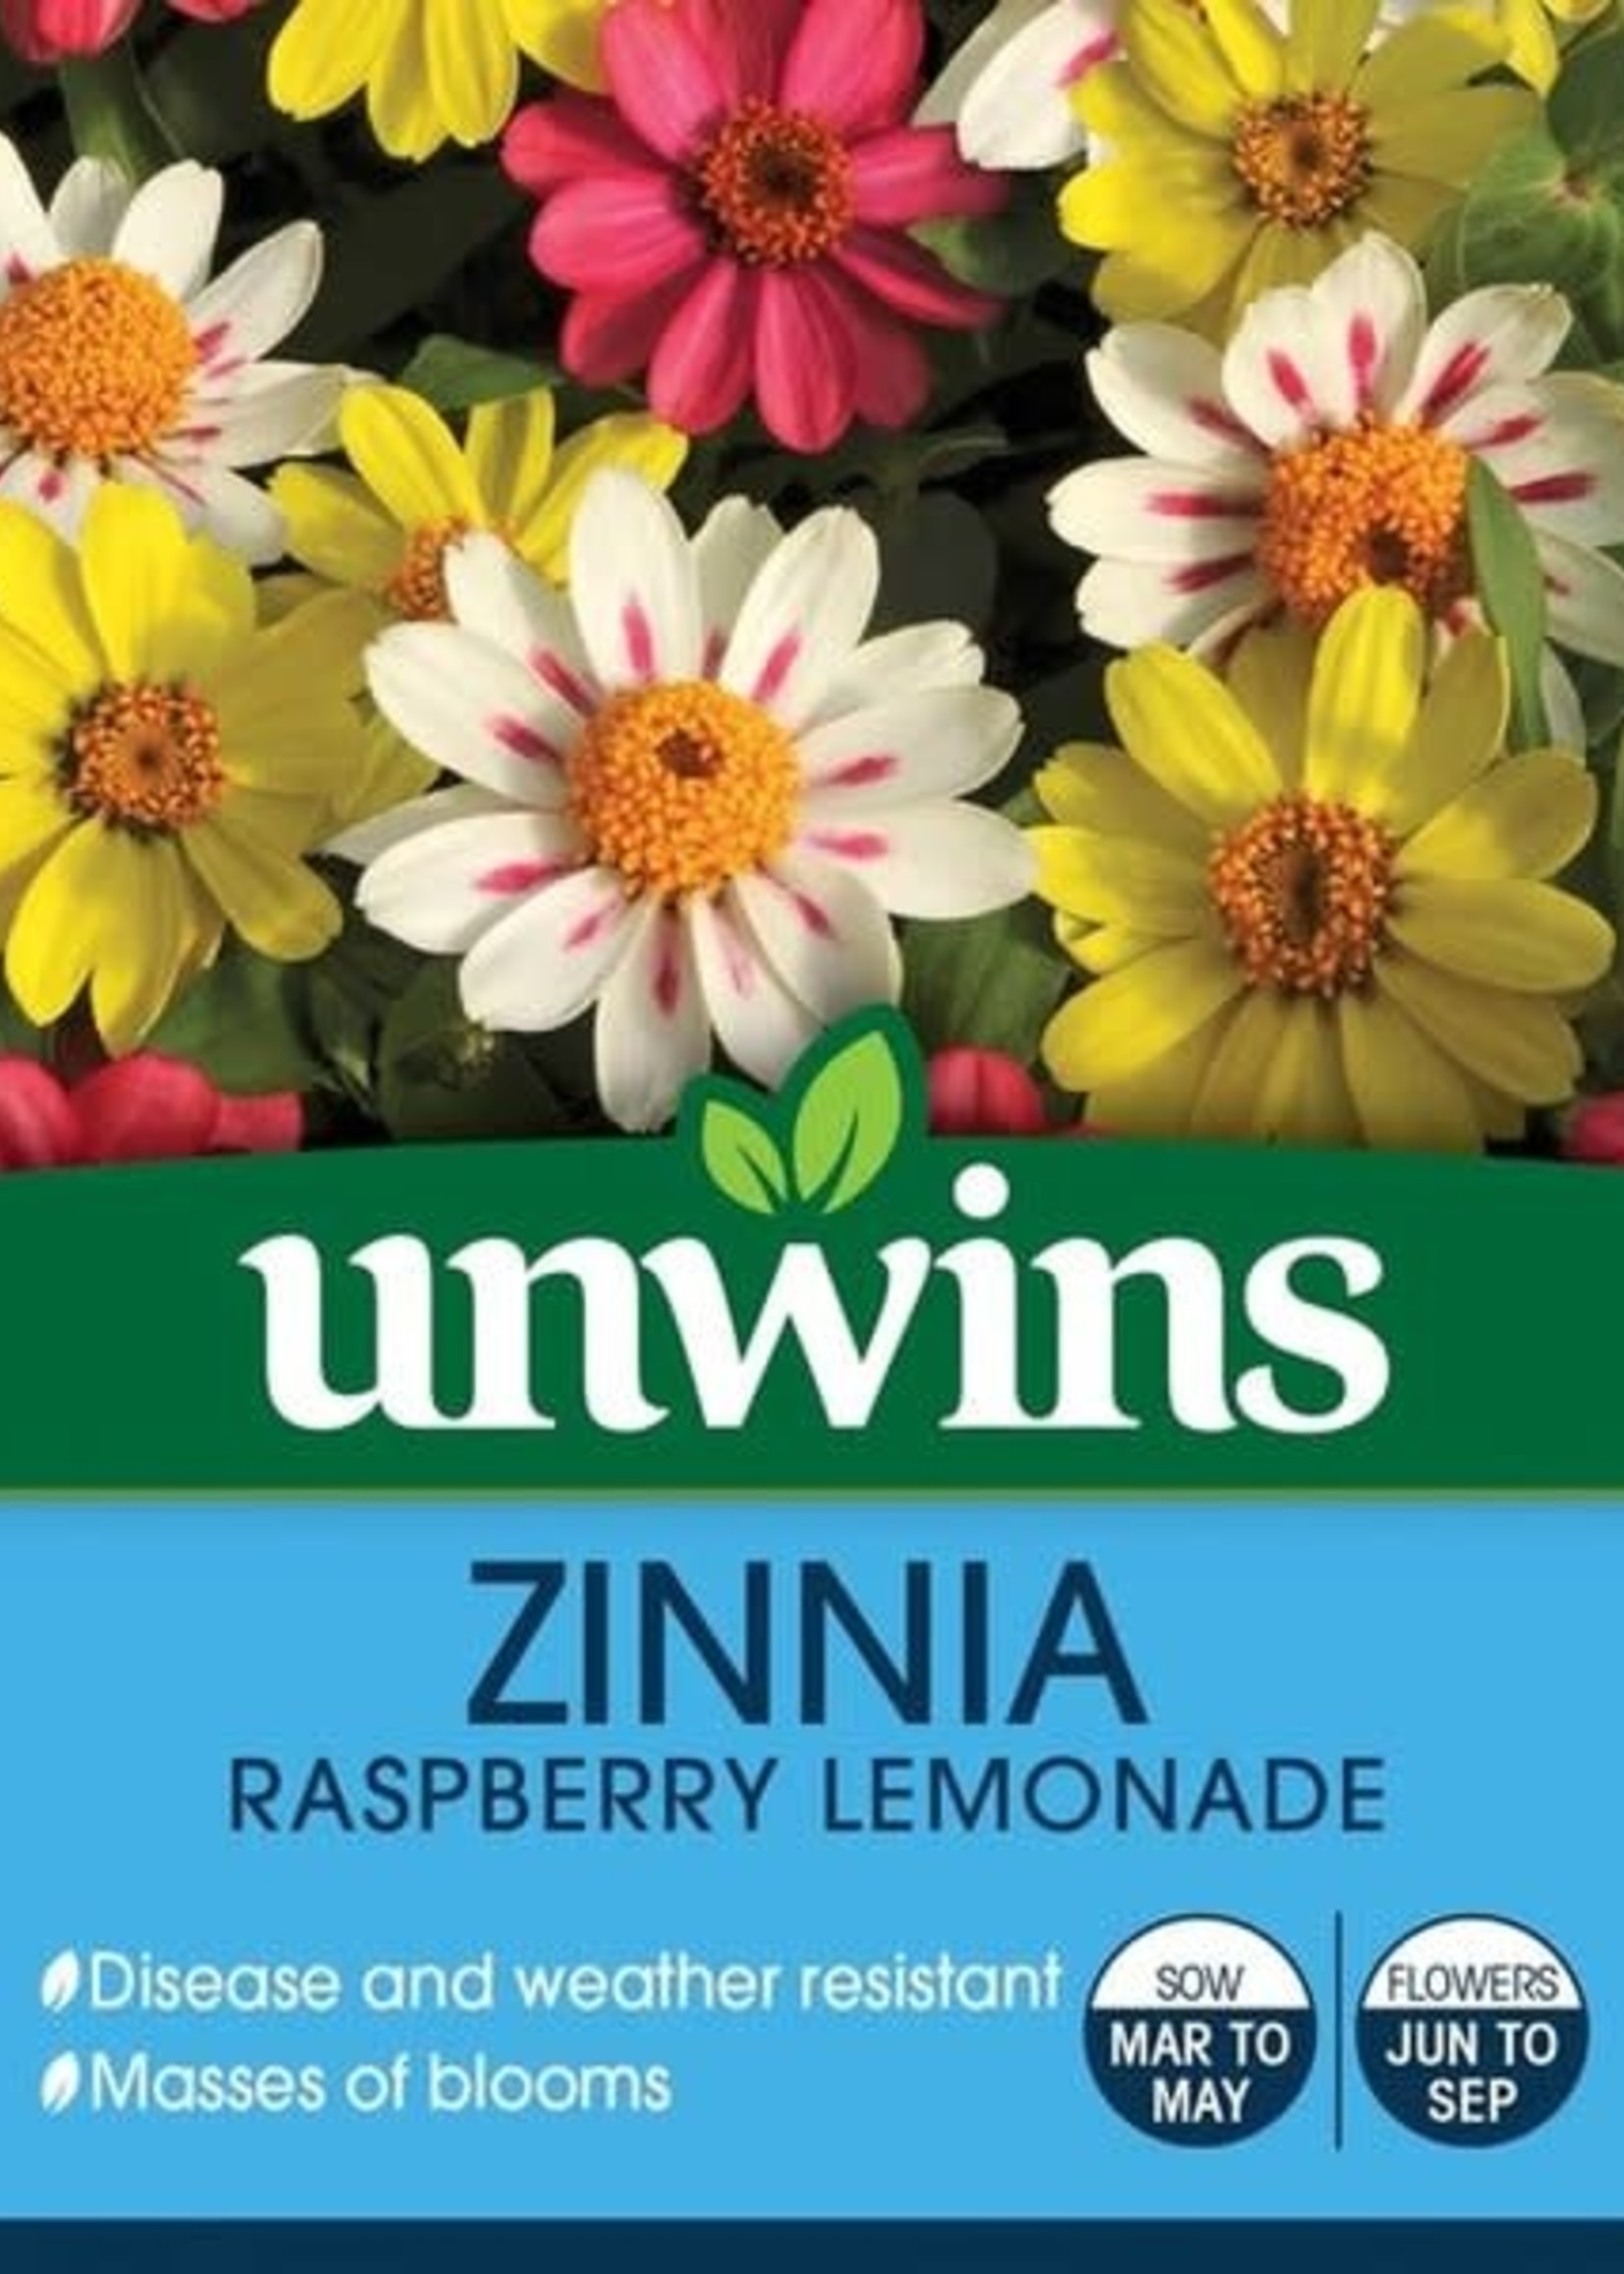 Unwins Zinnia - Raspberry Lemonade